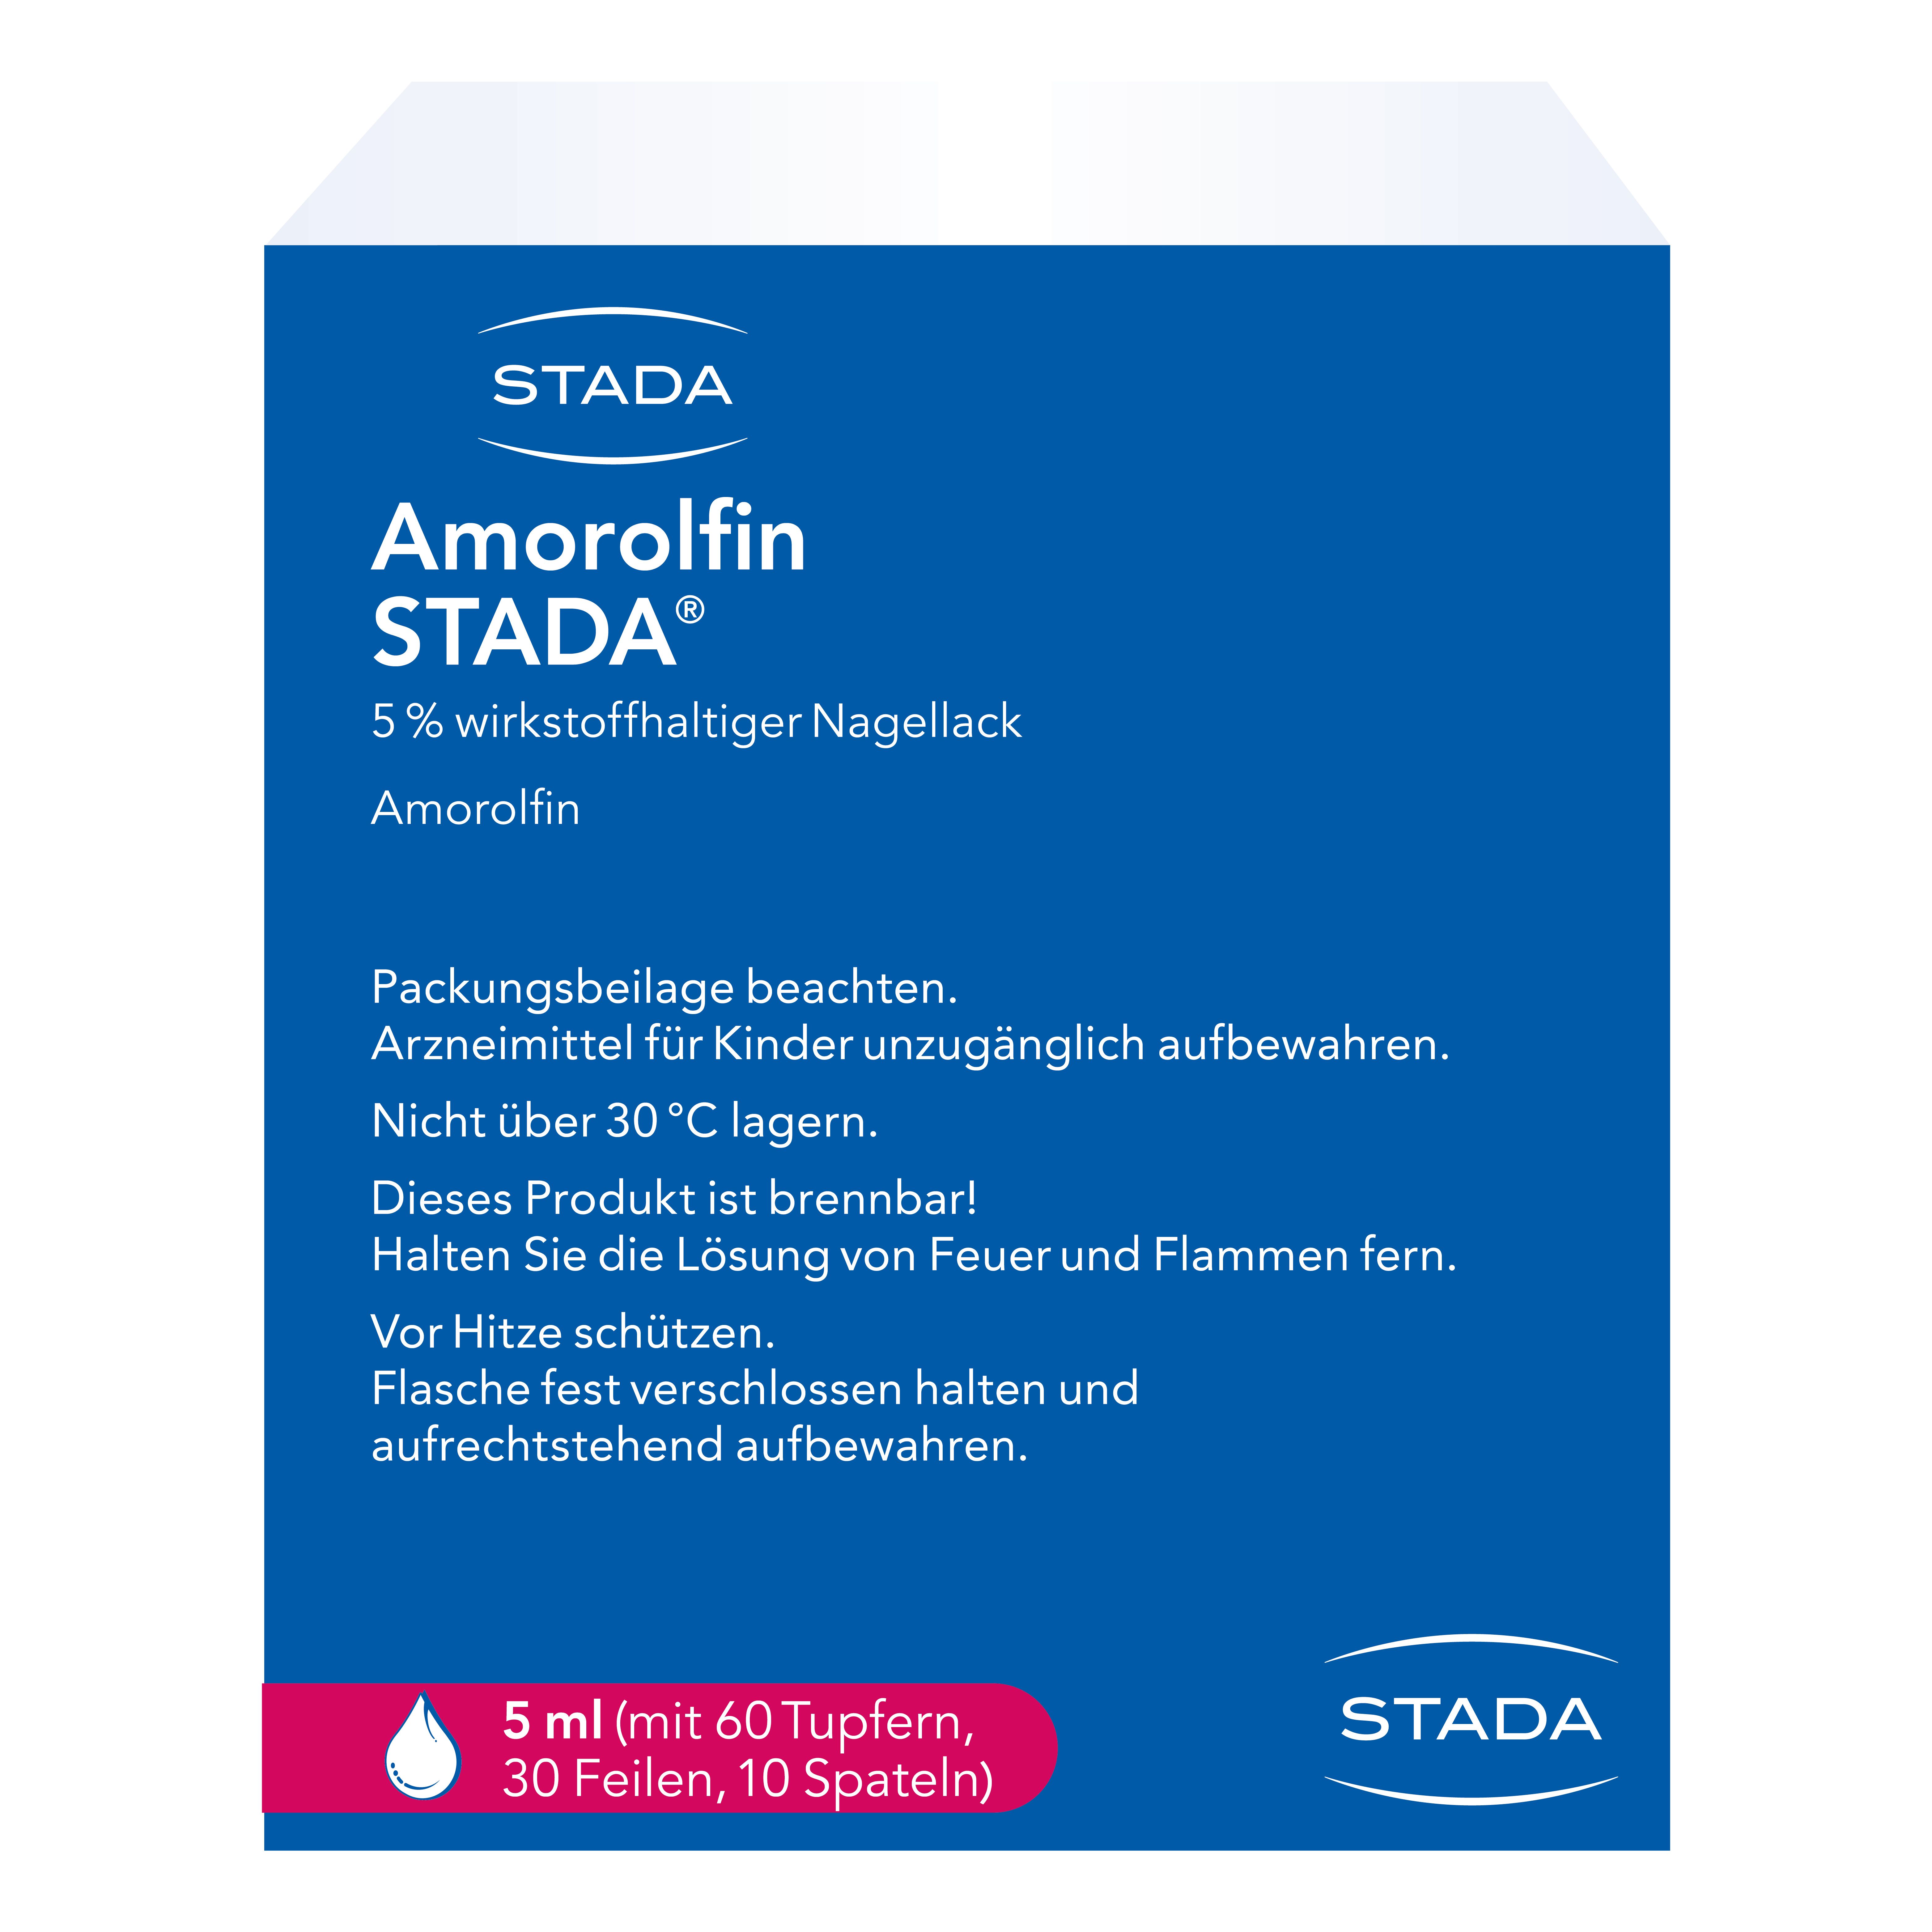 Amorolfin STADA® 5% wirkstoffhaltiger Nagellack